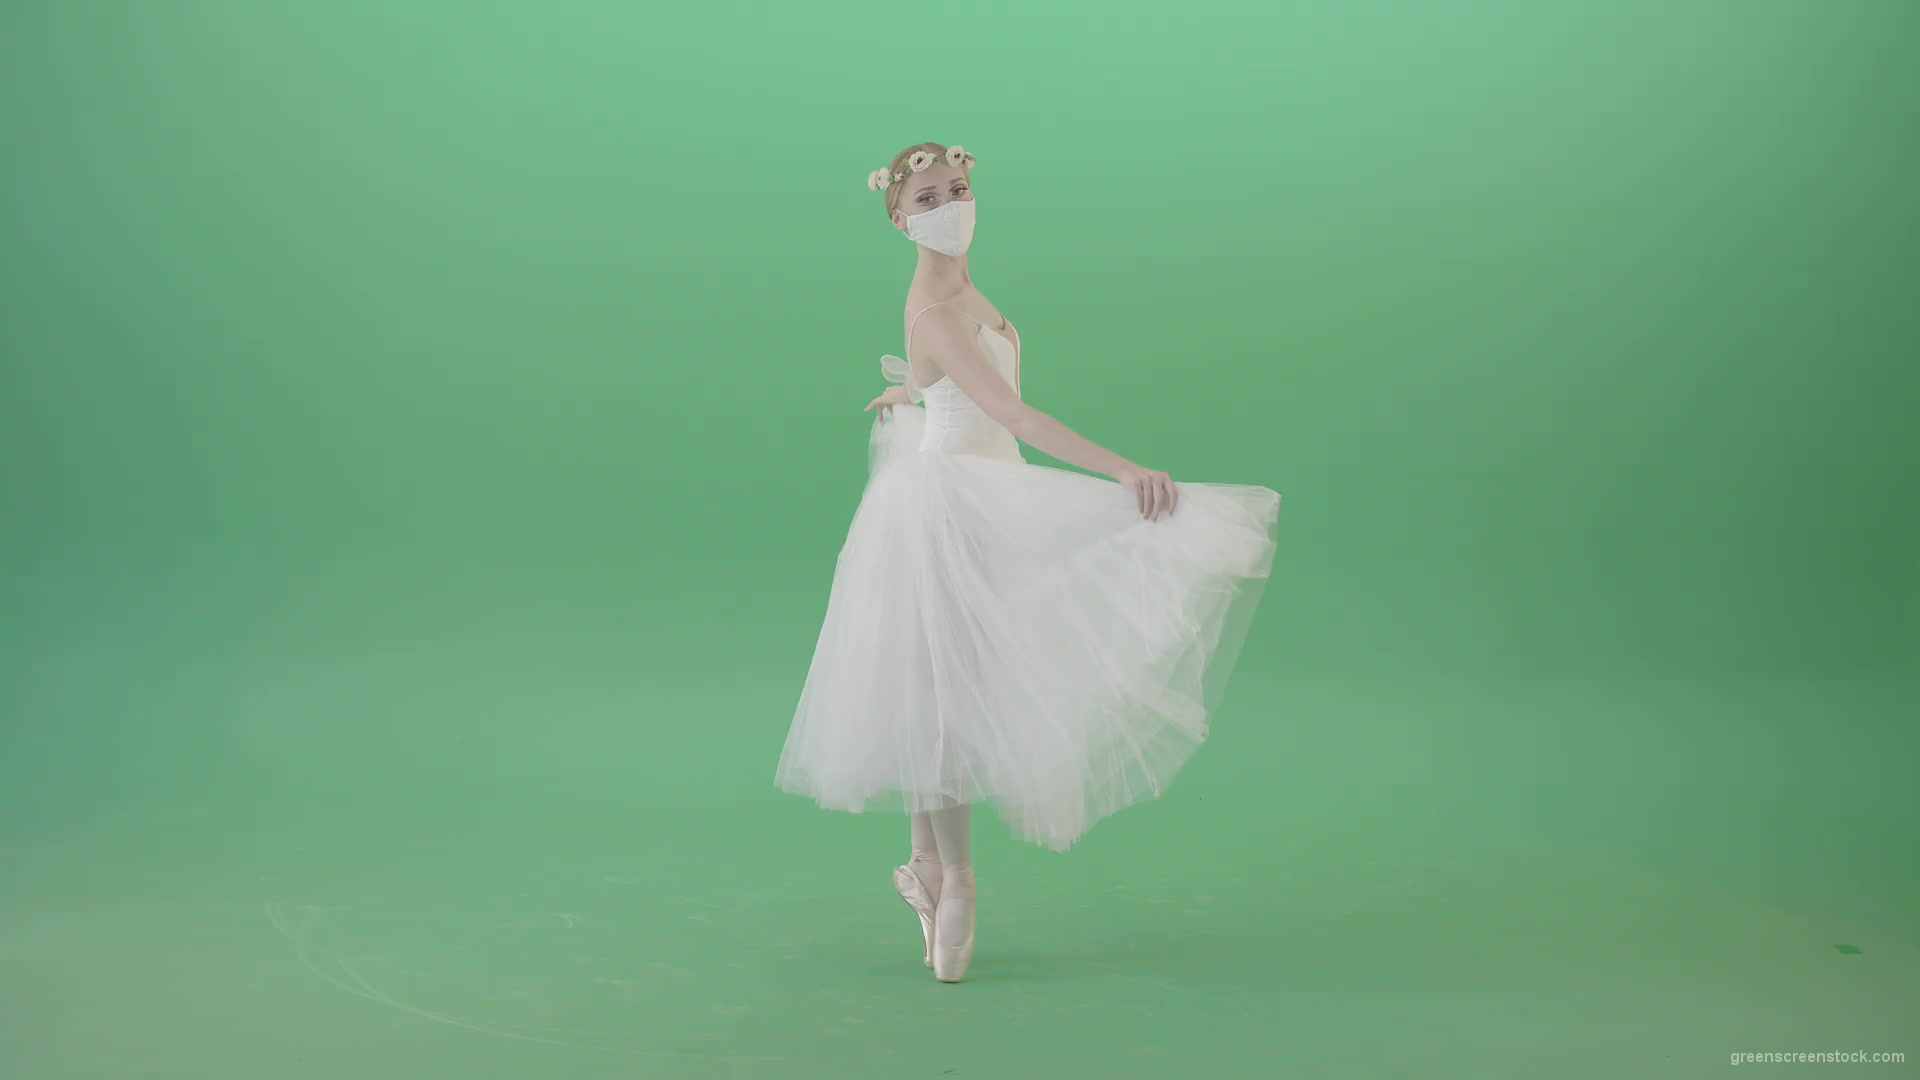 Ballet-Dancing-Girl-in-Corona-Virus-Mask-spinning-on-green-screen-4K-Video-Footage-1920_001 Green Screen Stock